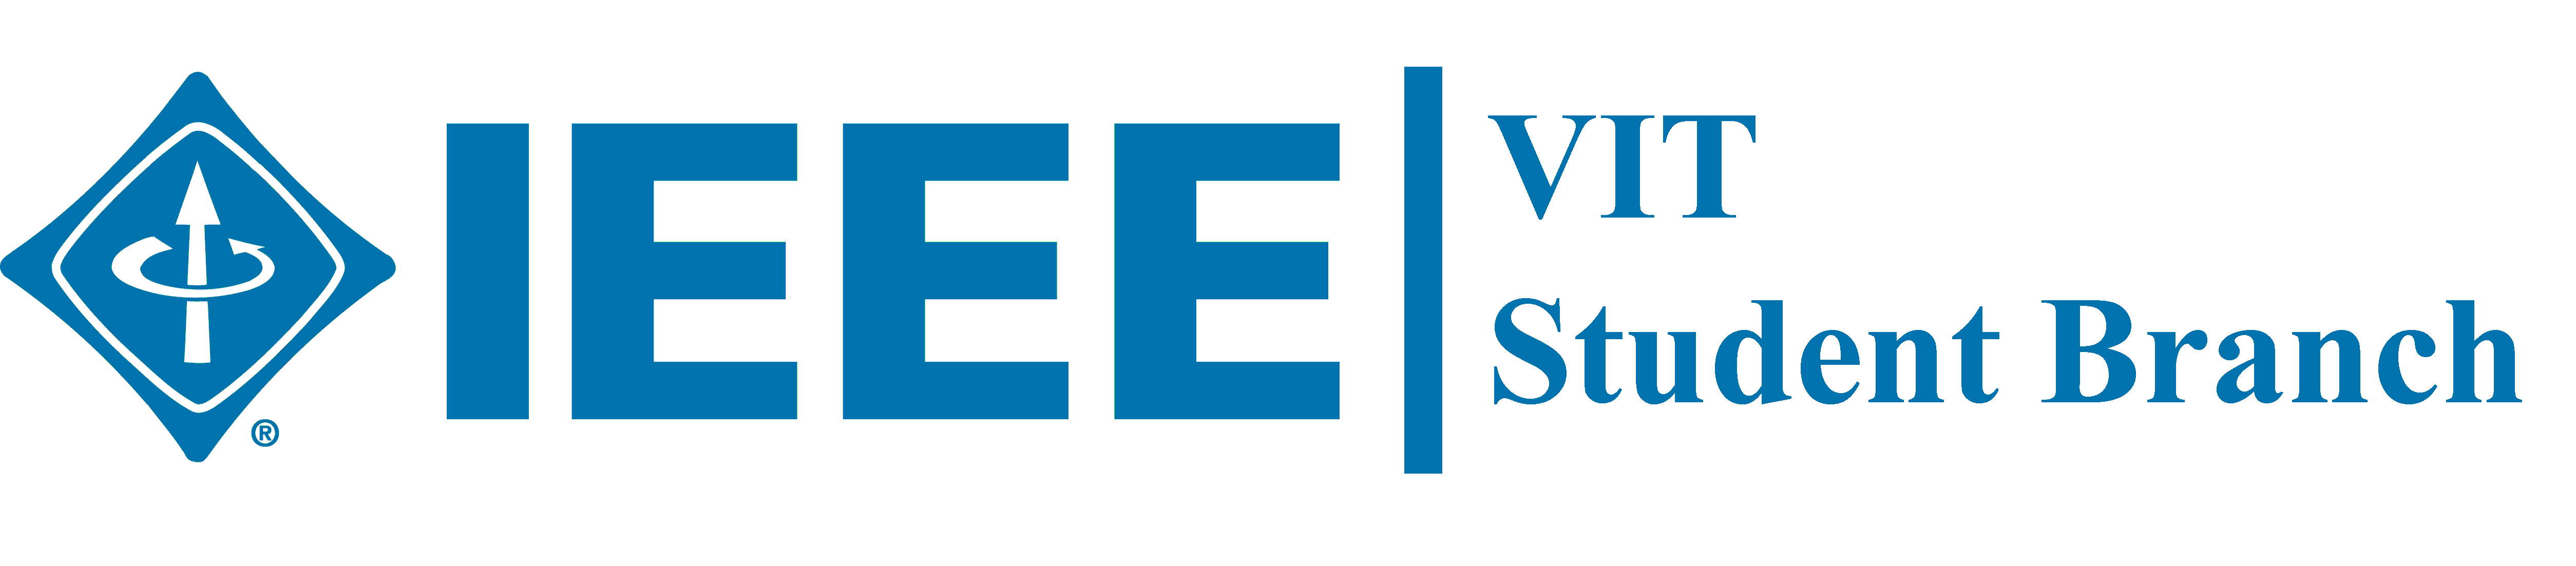 IEEE VIT Logo